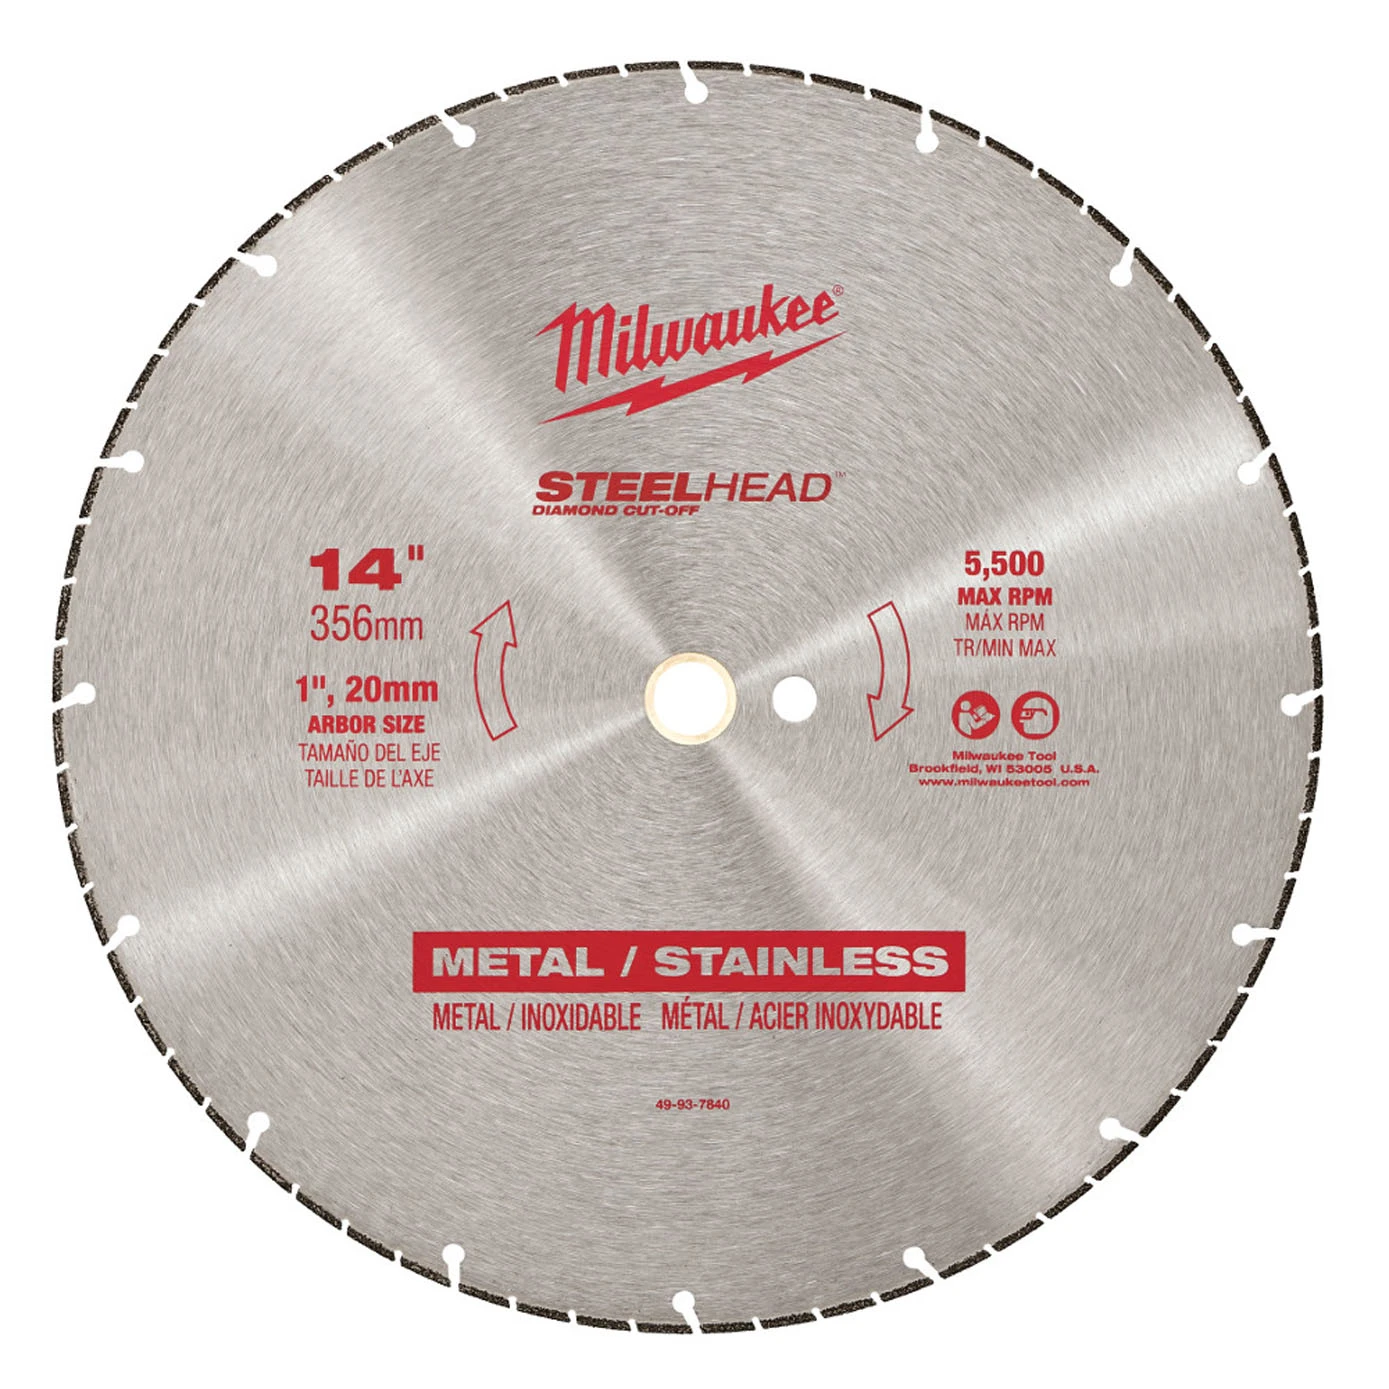 Milwaukee 49-93-7840 14 in. STEELHEAD Diamond Cut-Off Blade Adam's Tarp   Tool Ltd